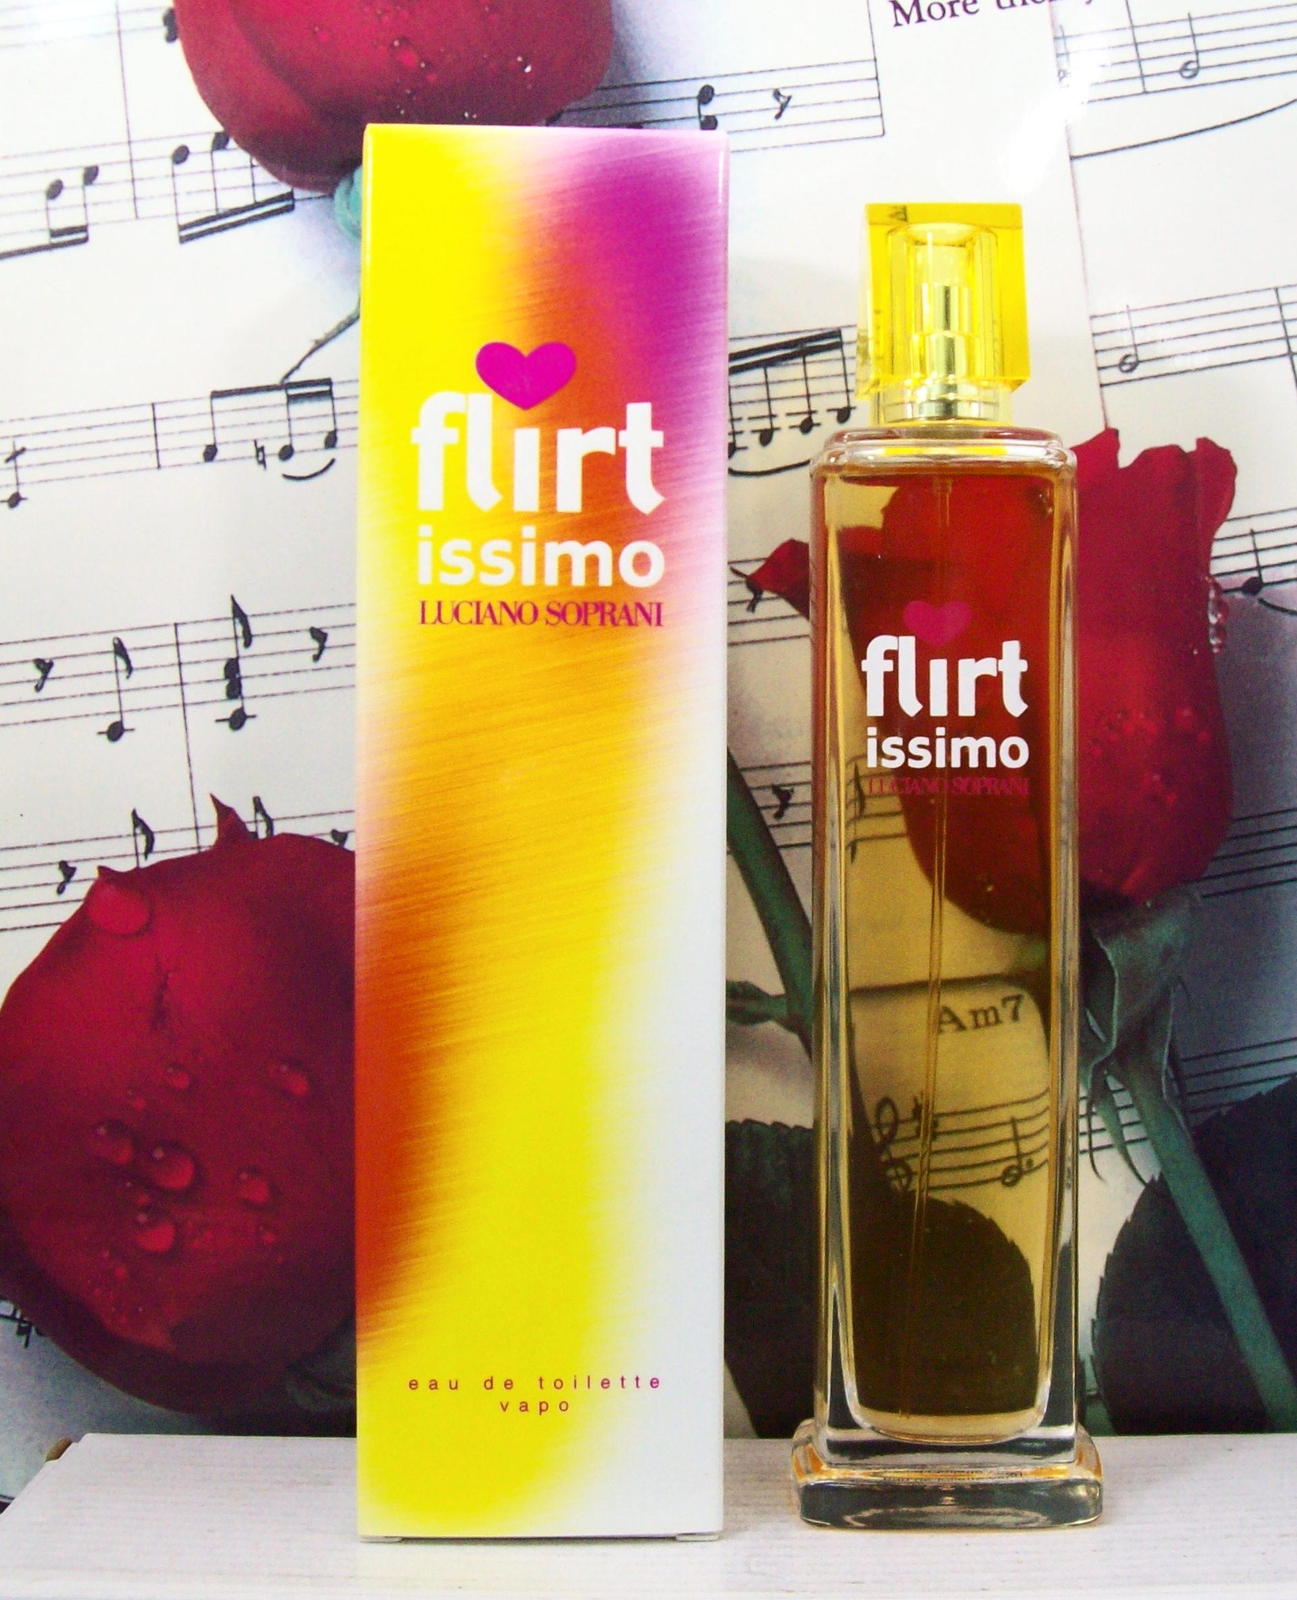 Luciano Soprani Flirt Issimo EDT Spray 3.3 FL. OZ. NWB - $179.99